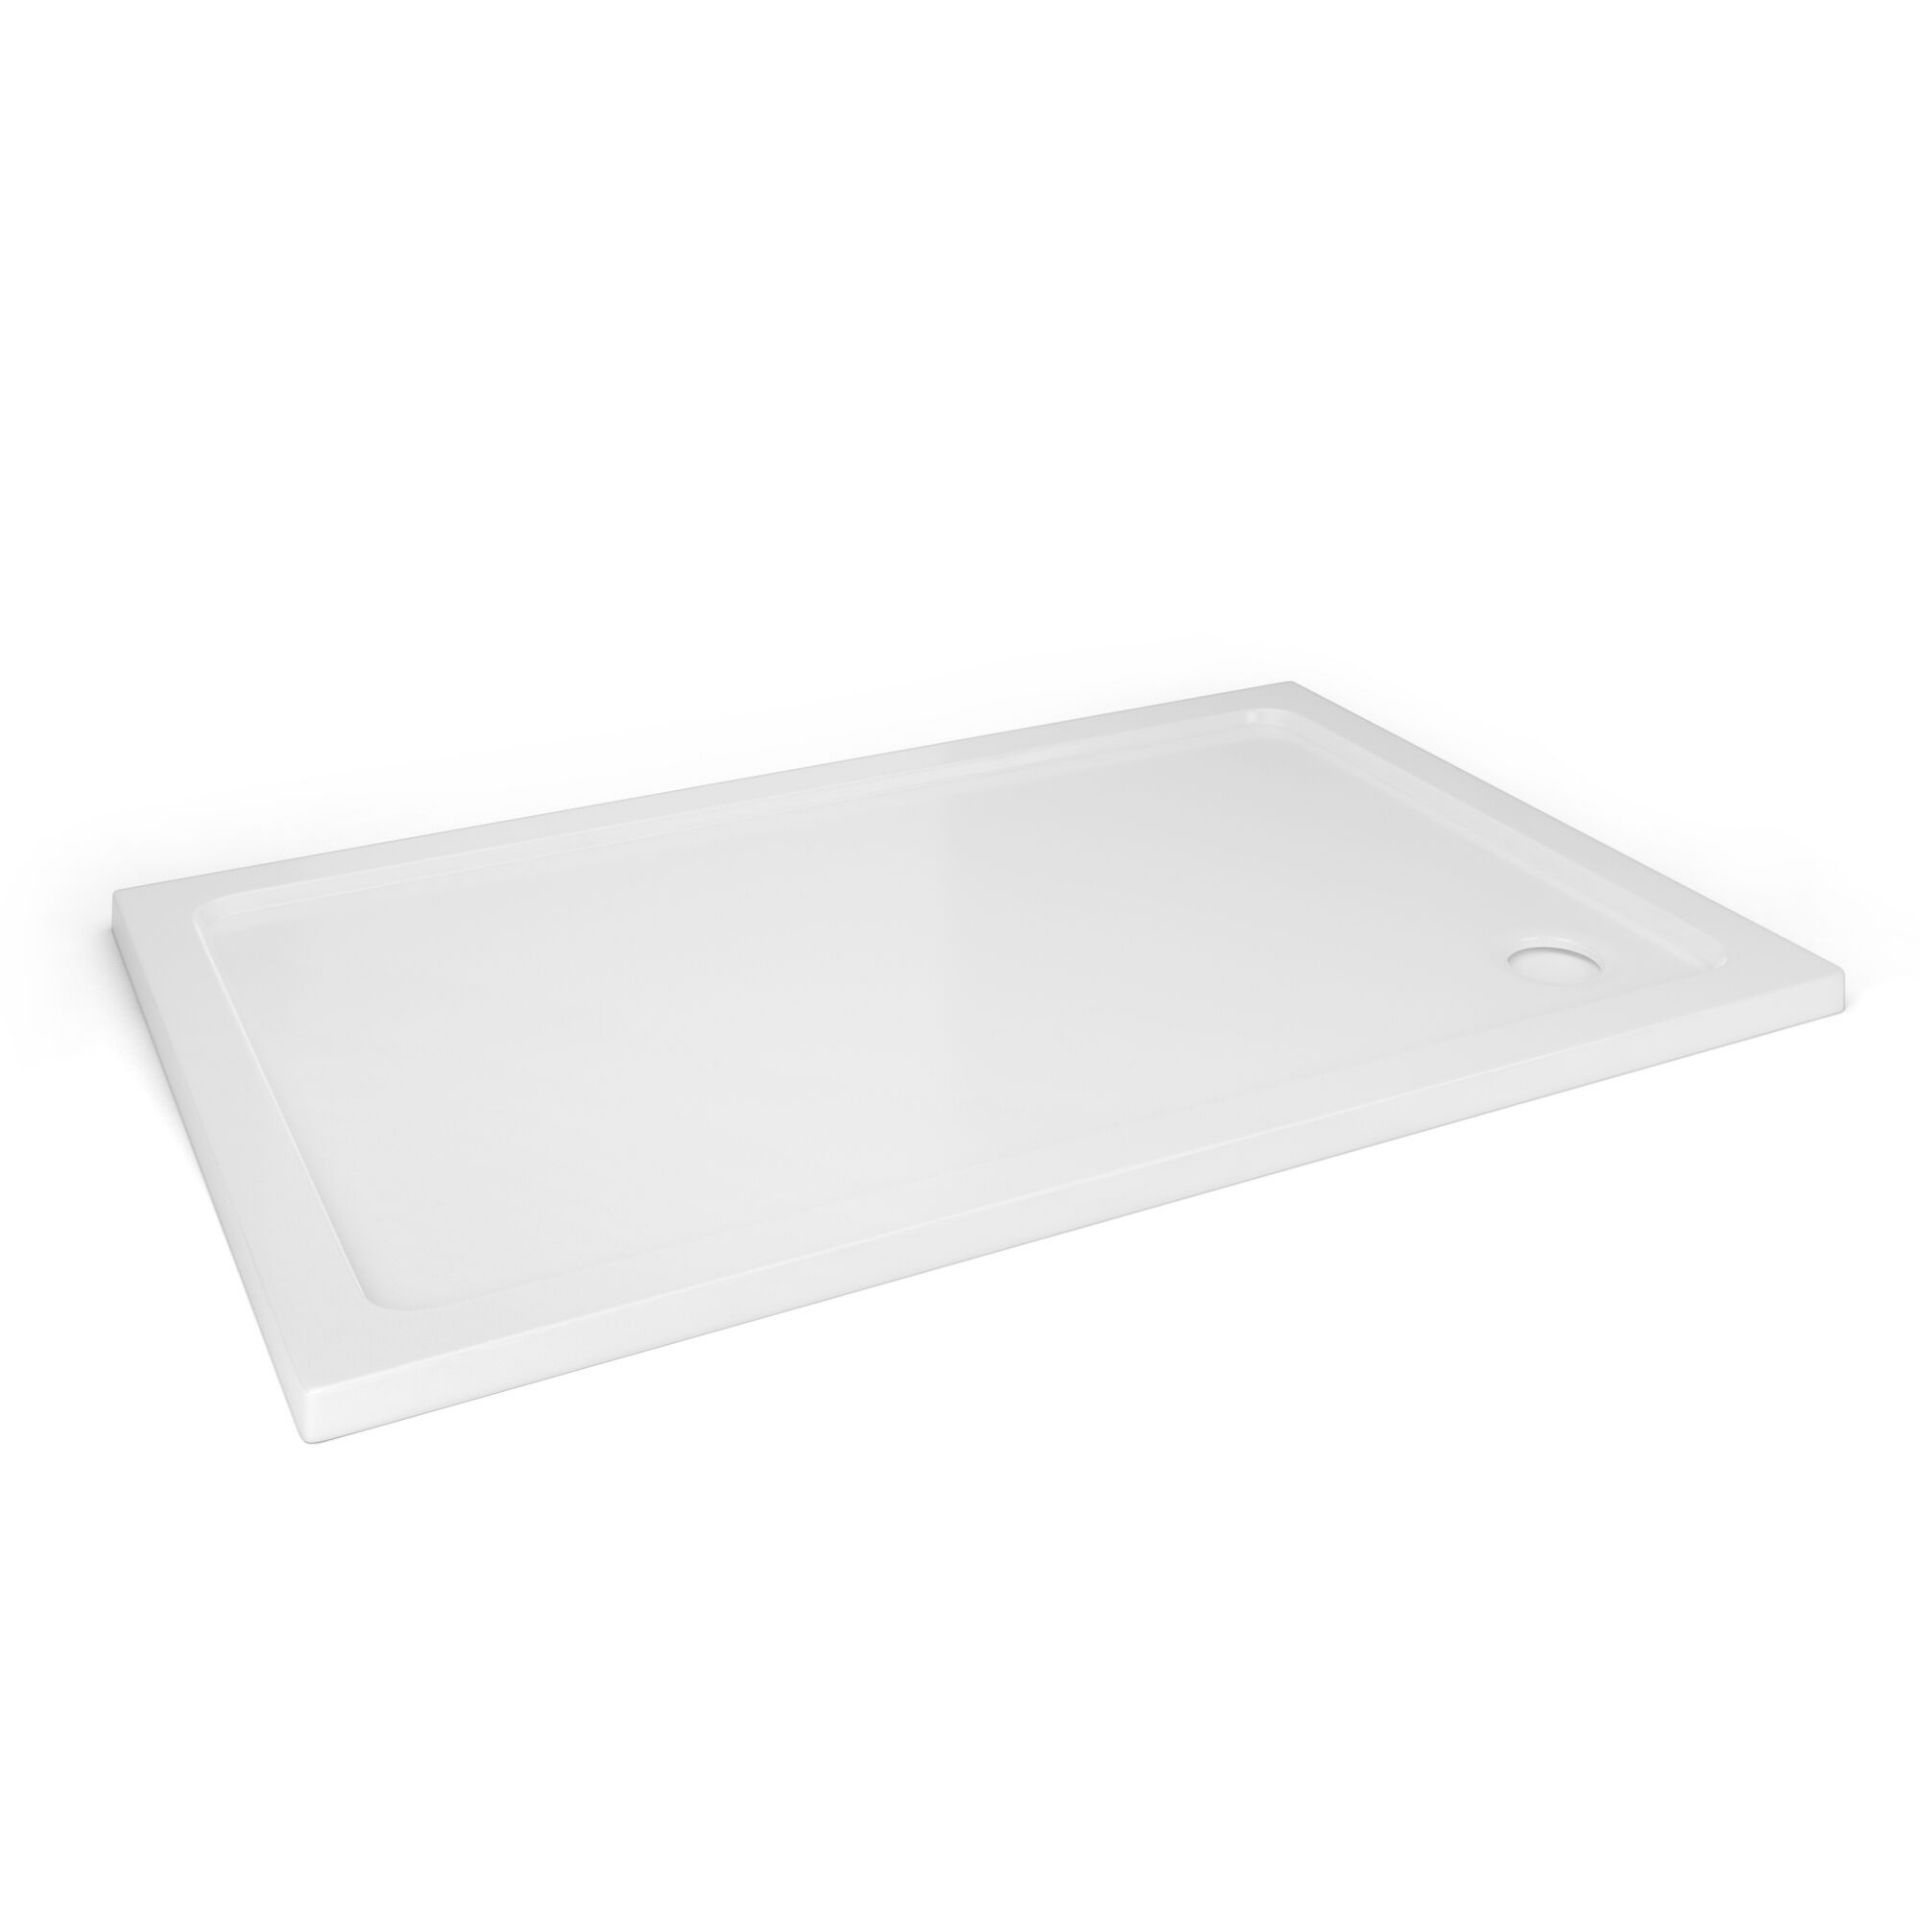 (SUP28) New 1700x900mm Rectangular Ultra Slim Stone Shower Tray. Low profile ultra slim design Gel - Image 2 of 2